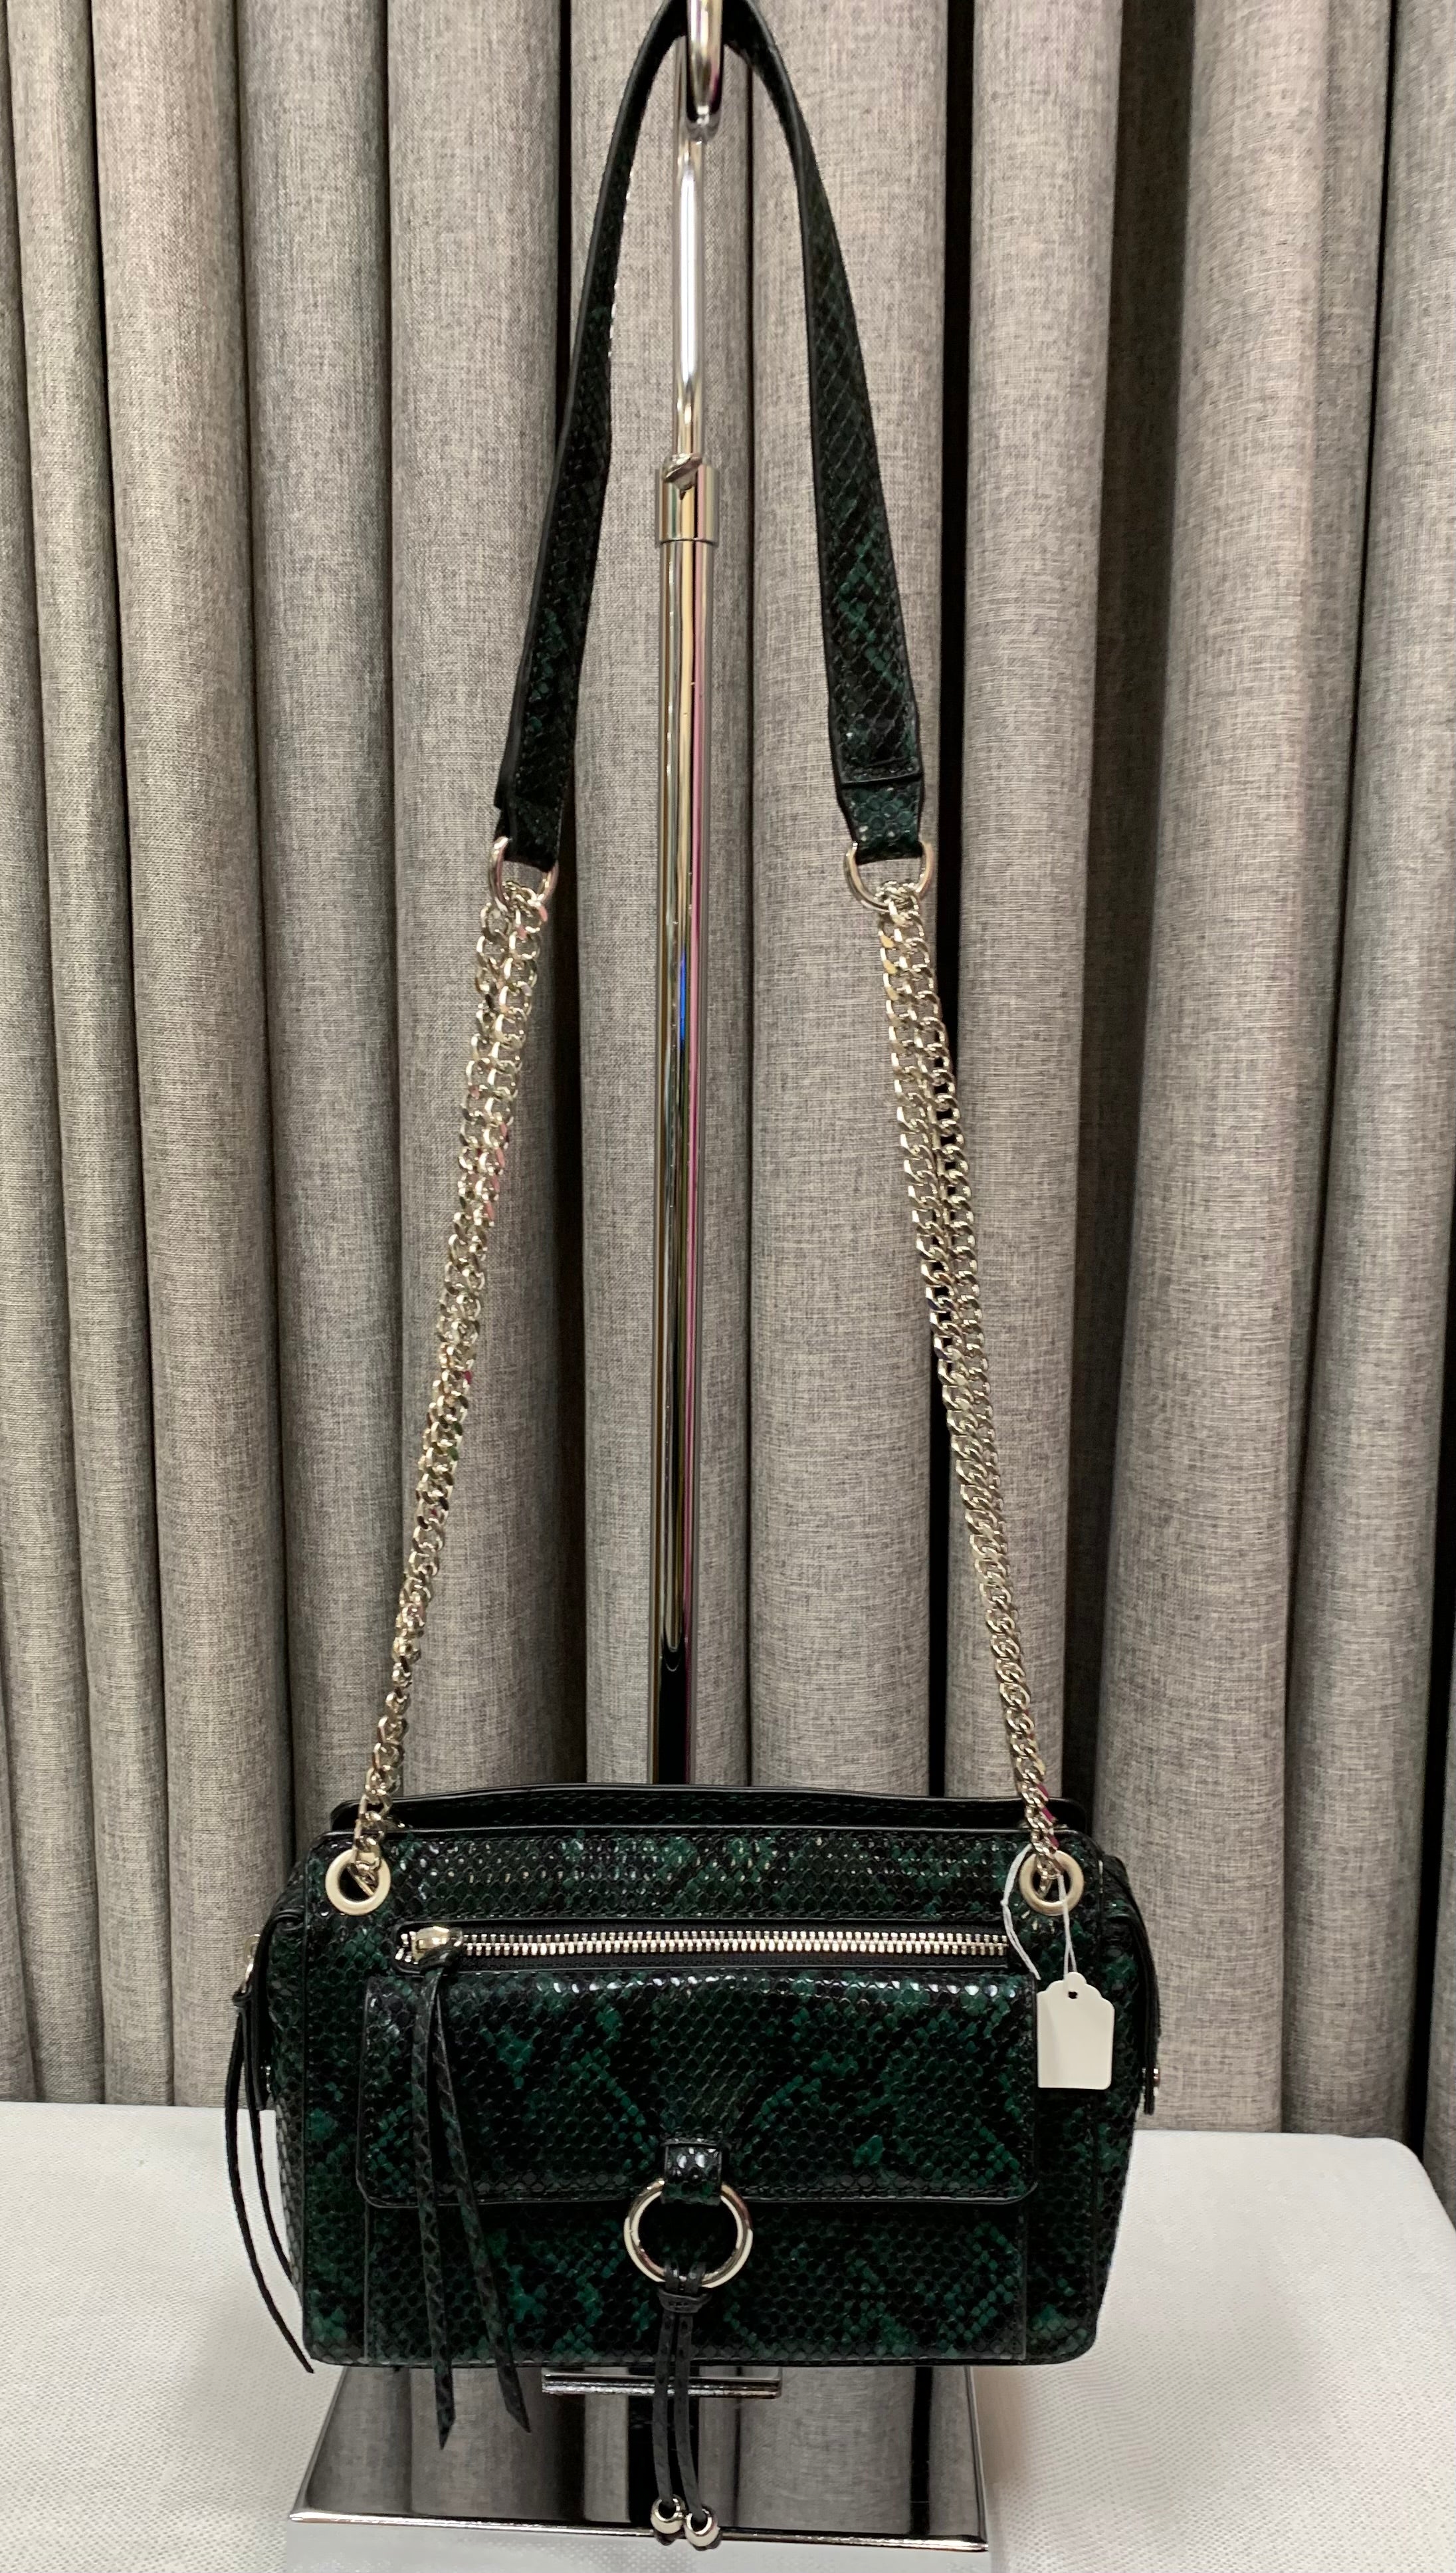 Topshop Emerald Green Snakeskin Print Crossbody Handbag